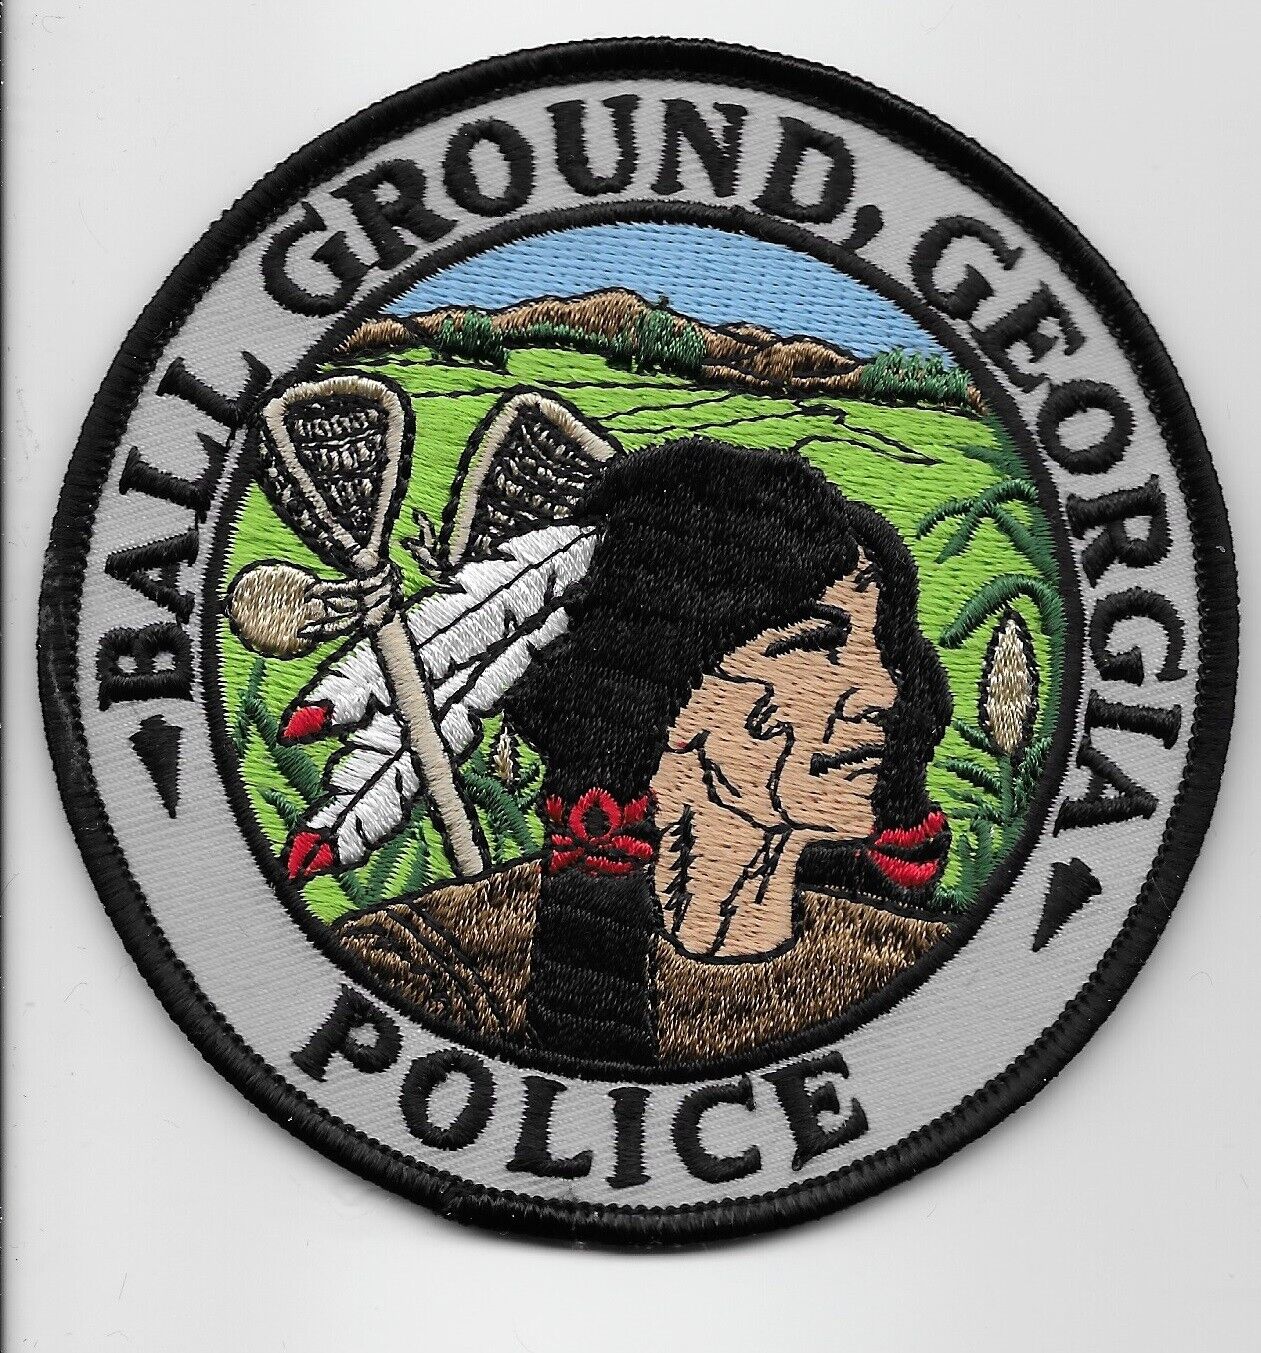 New Ball Ground Police State Georgia GA Scenic Indian head